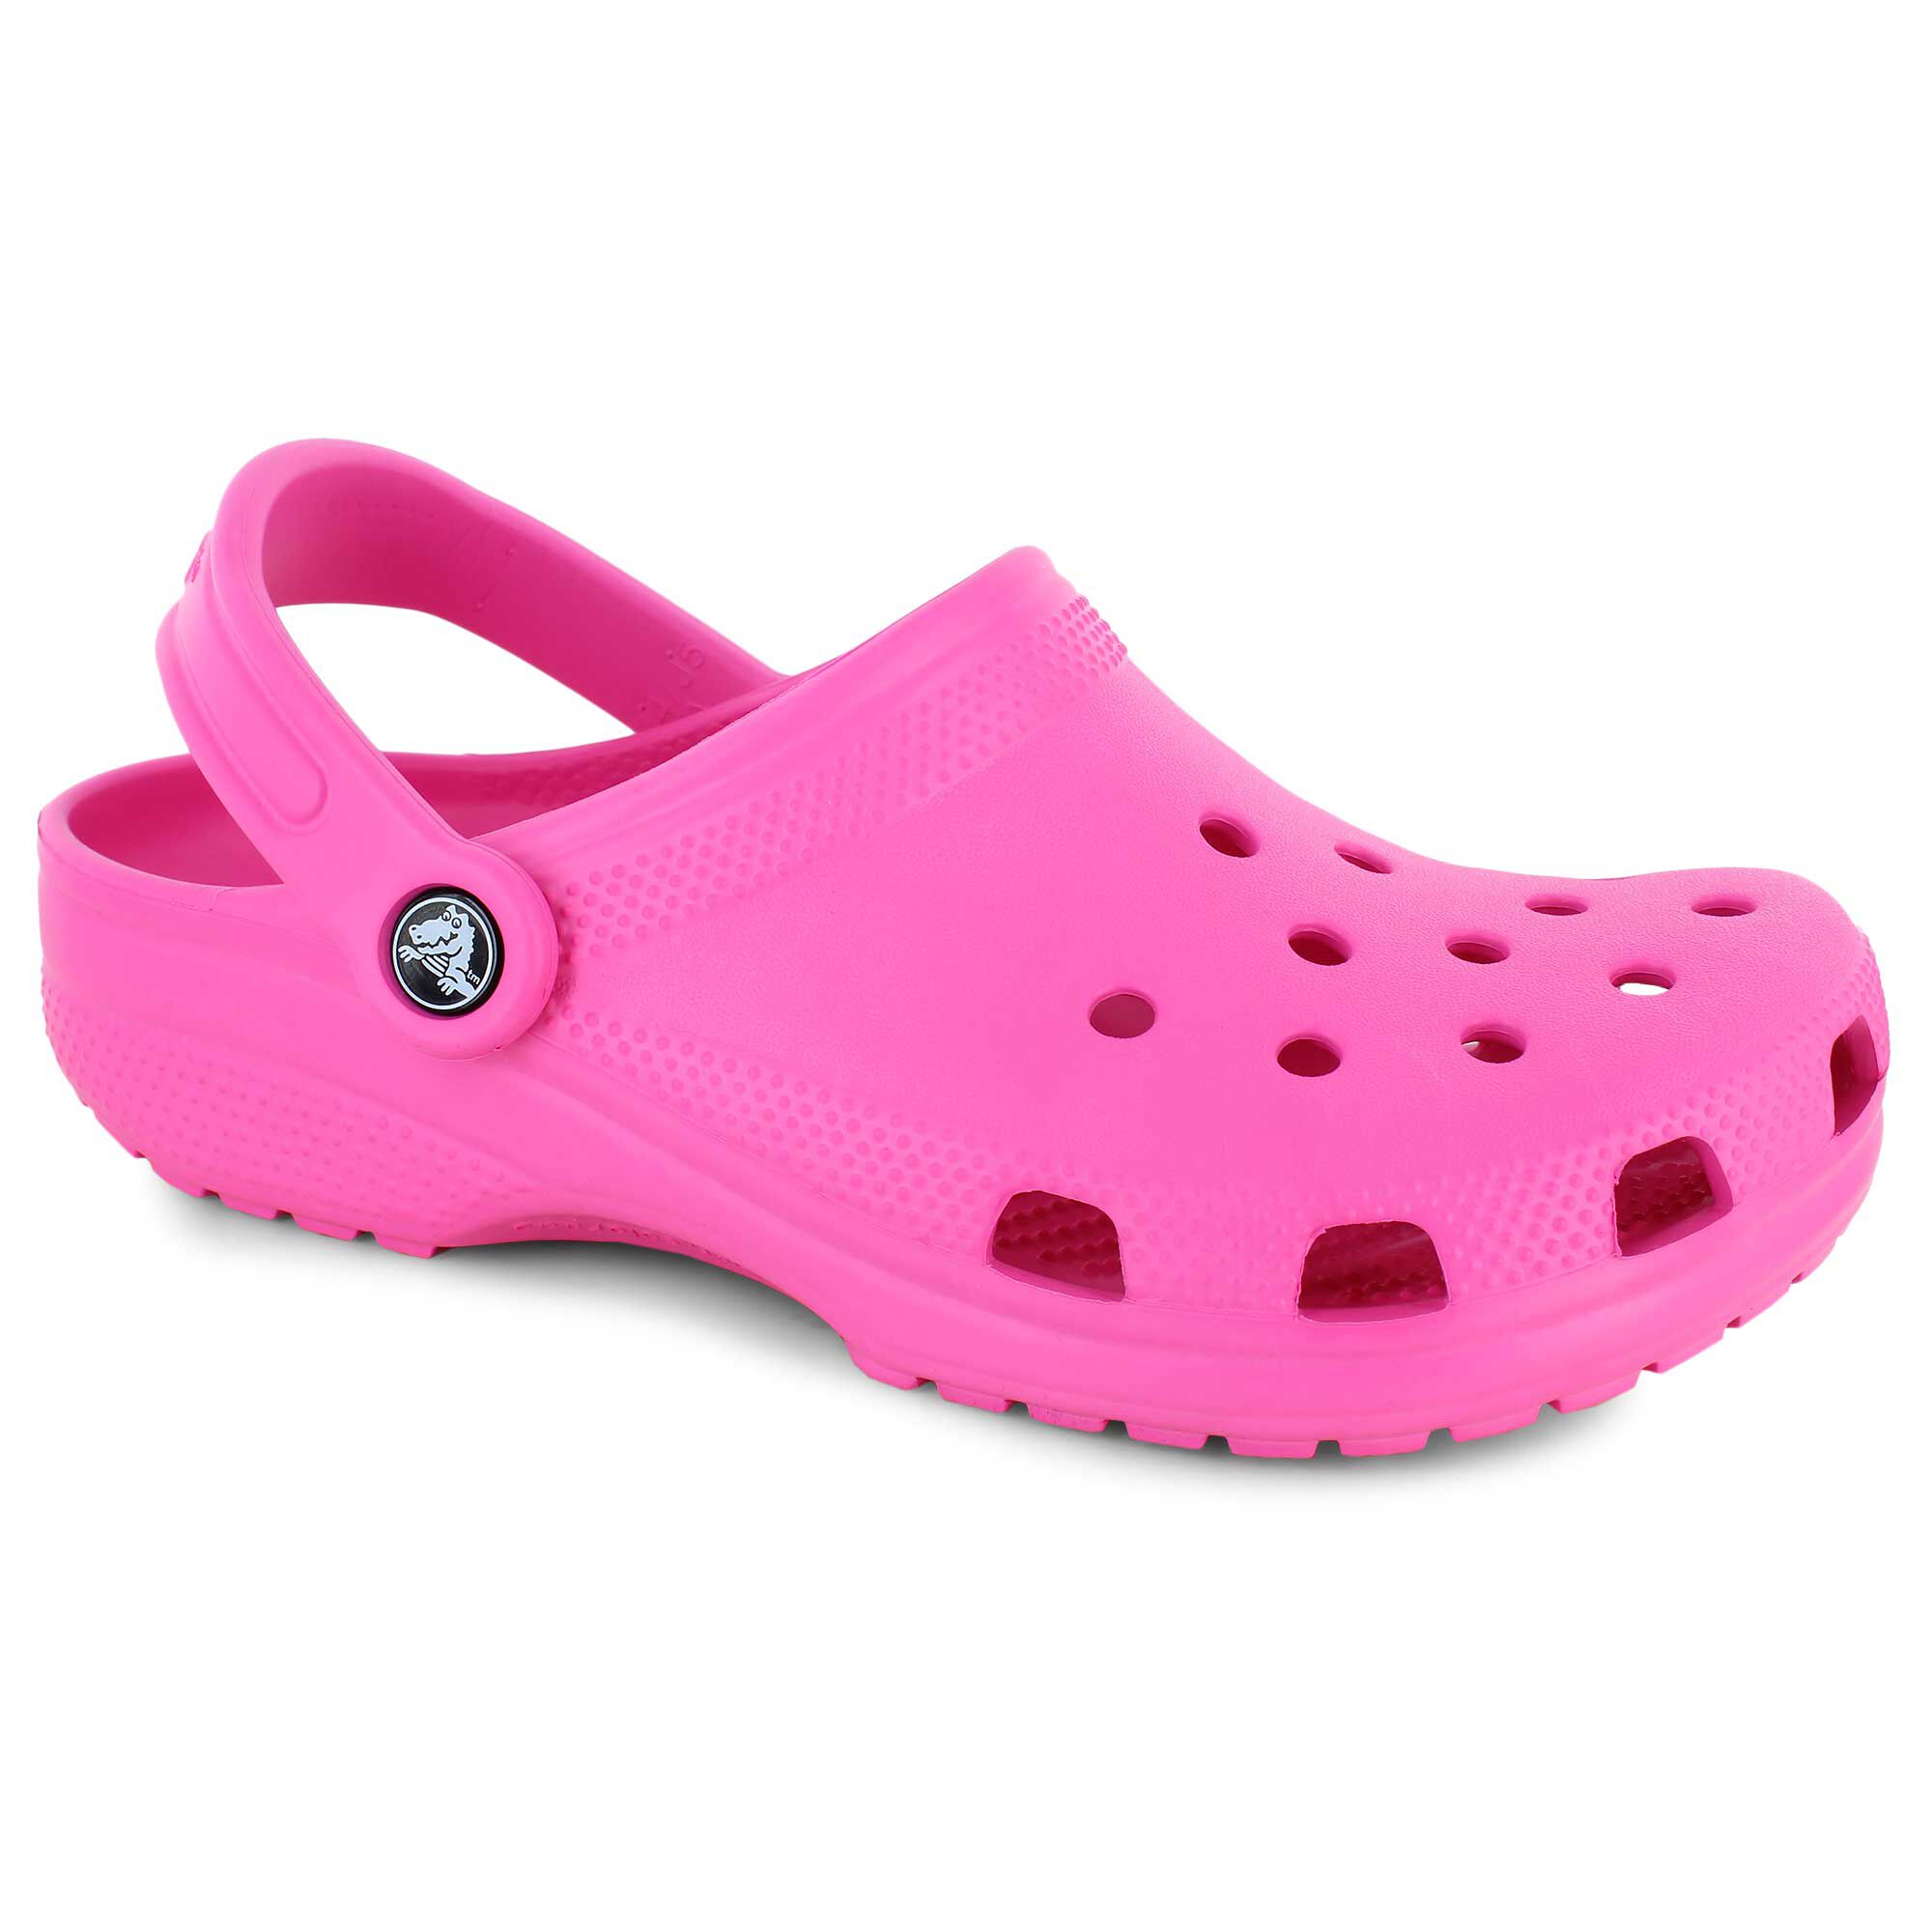 does shoe dept sell crocs